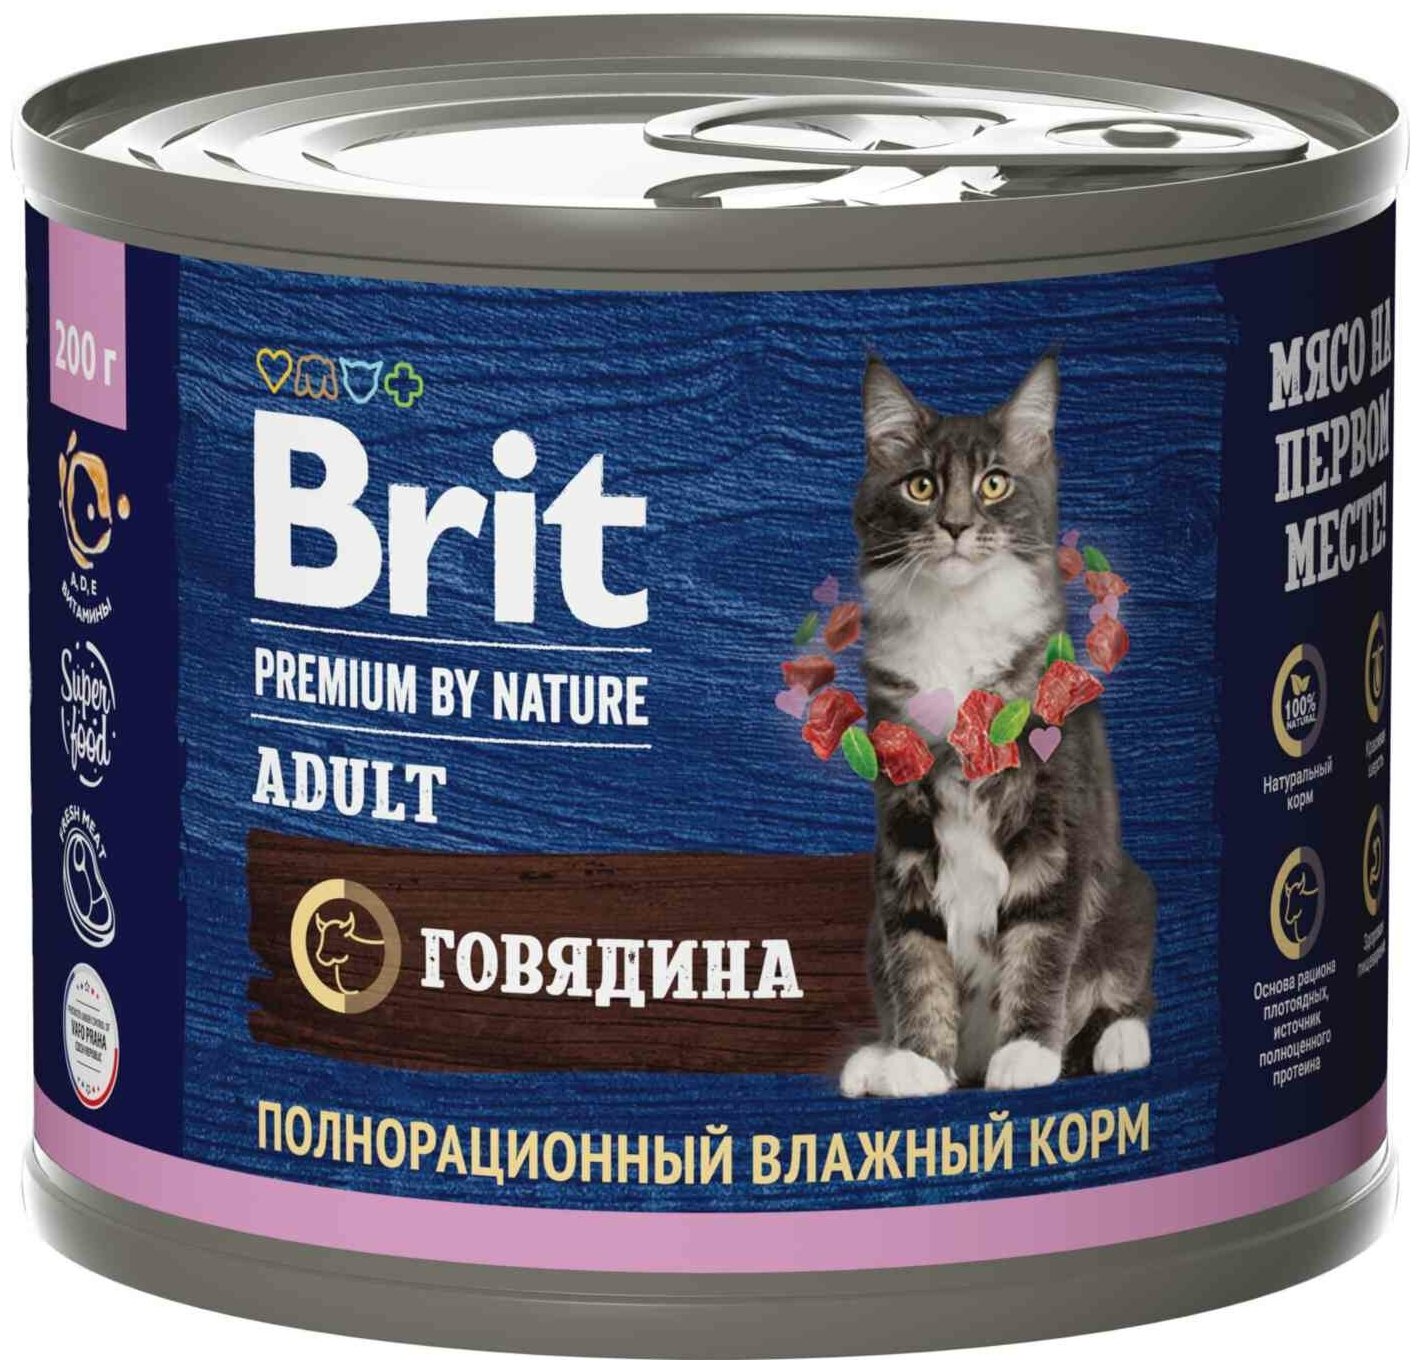 Brit Premium by Nature консервы с мясом говядины для кошек 0,2кг - фотография № 1